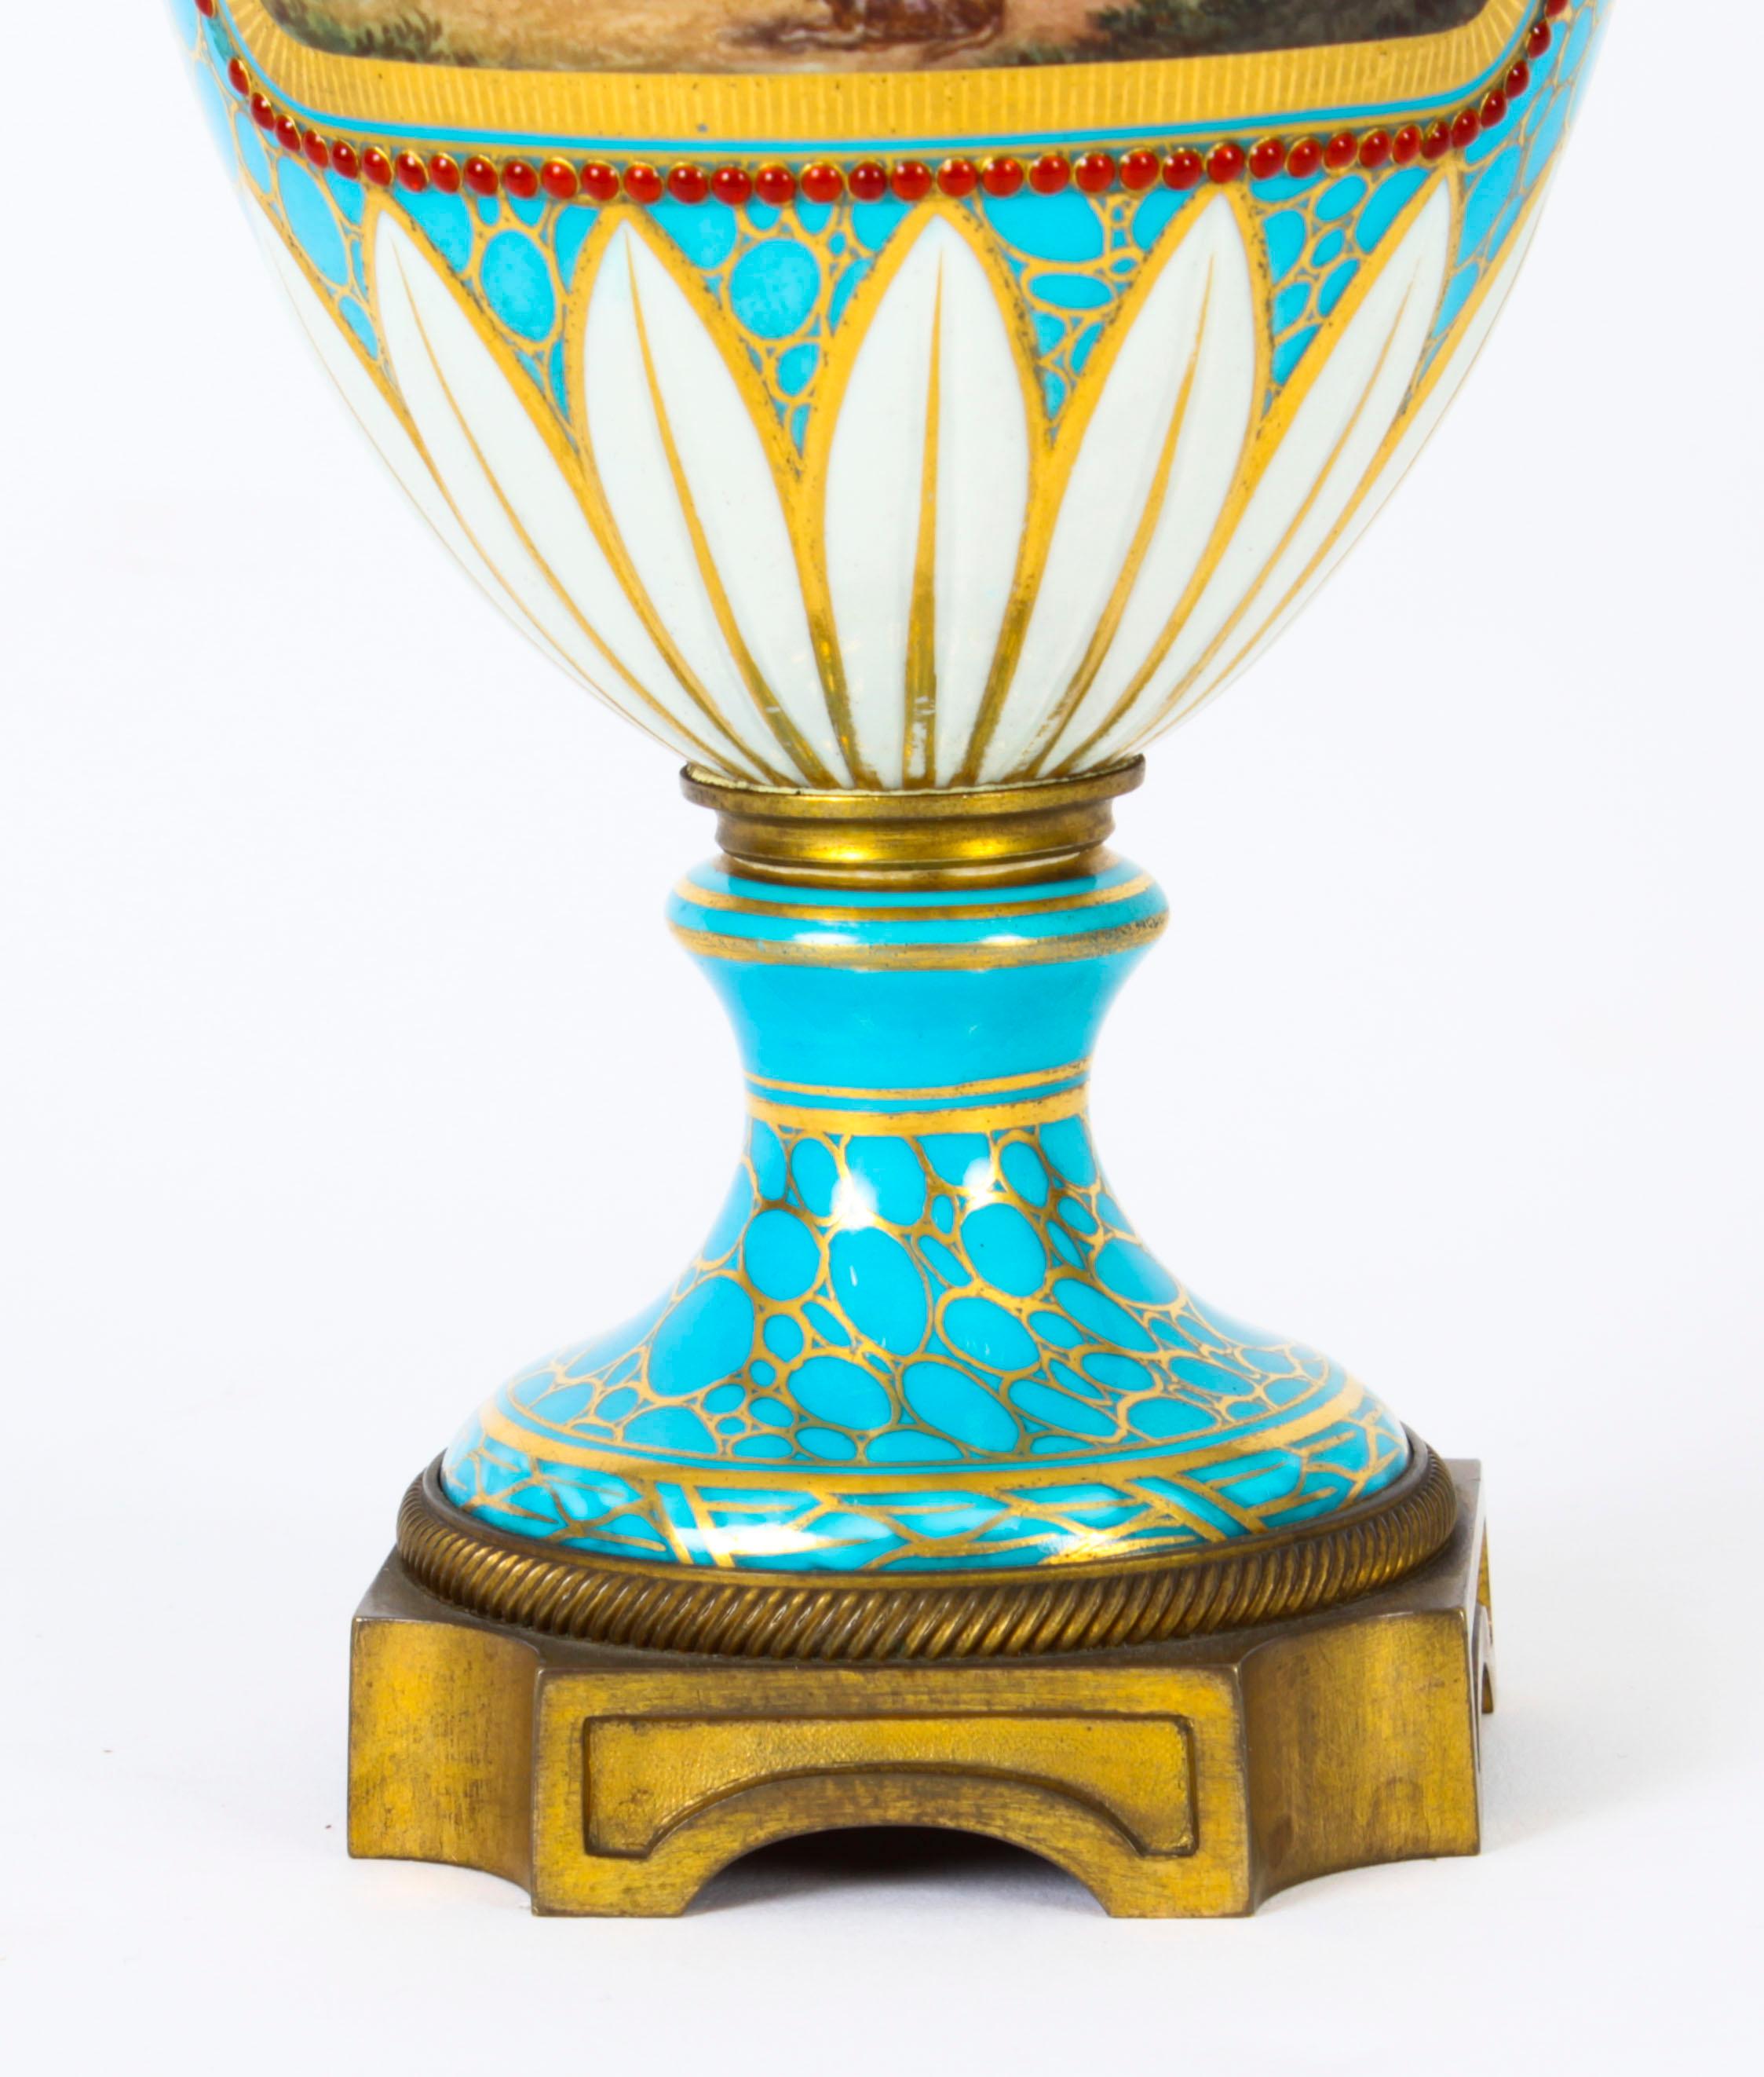 Antique Pair of French Bleu Celeste Porcelain Urns 19th Century For Sale 1